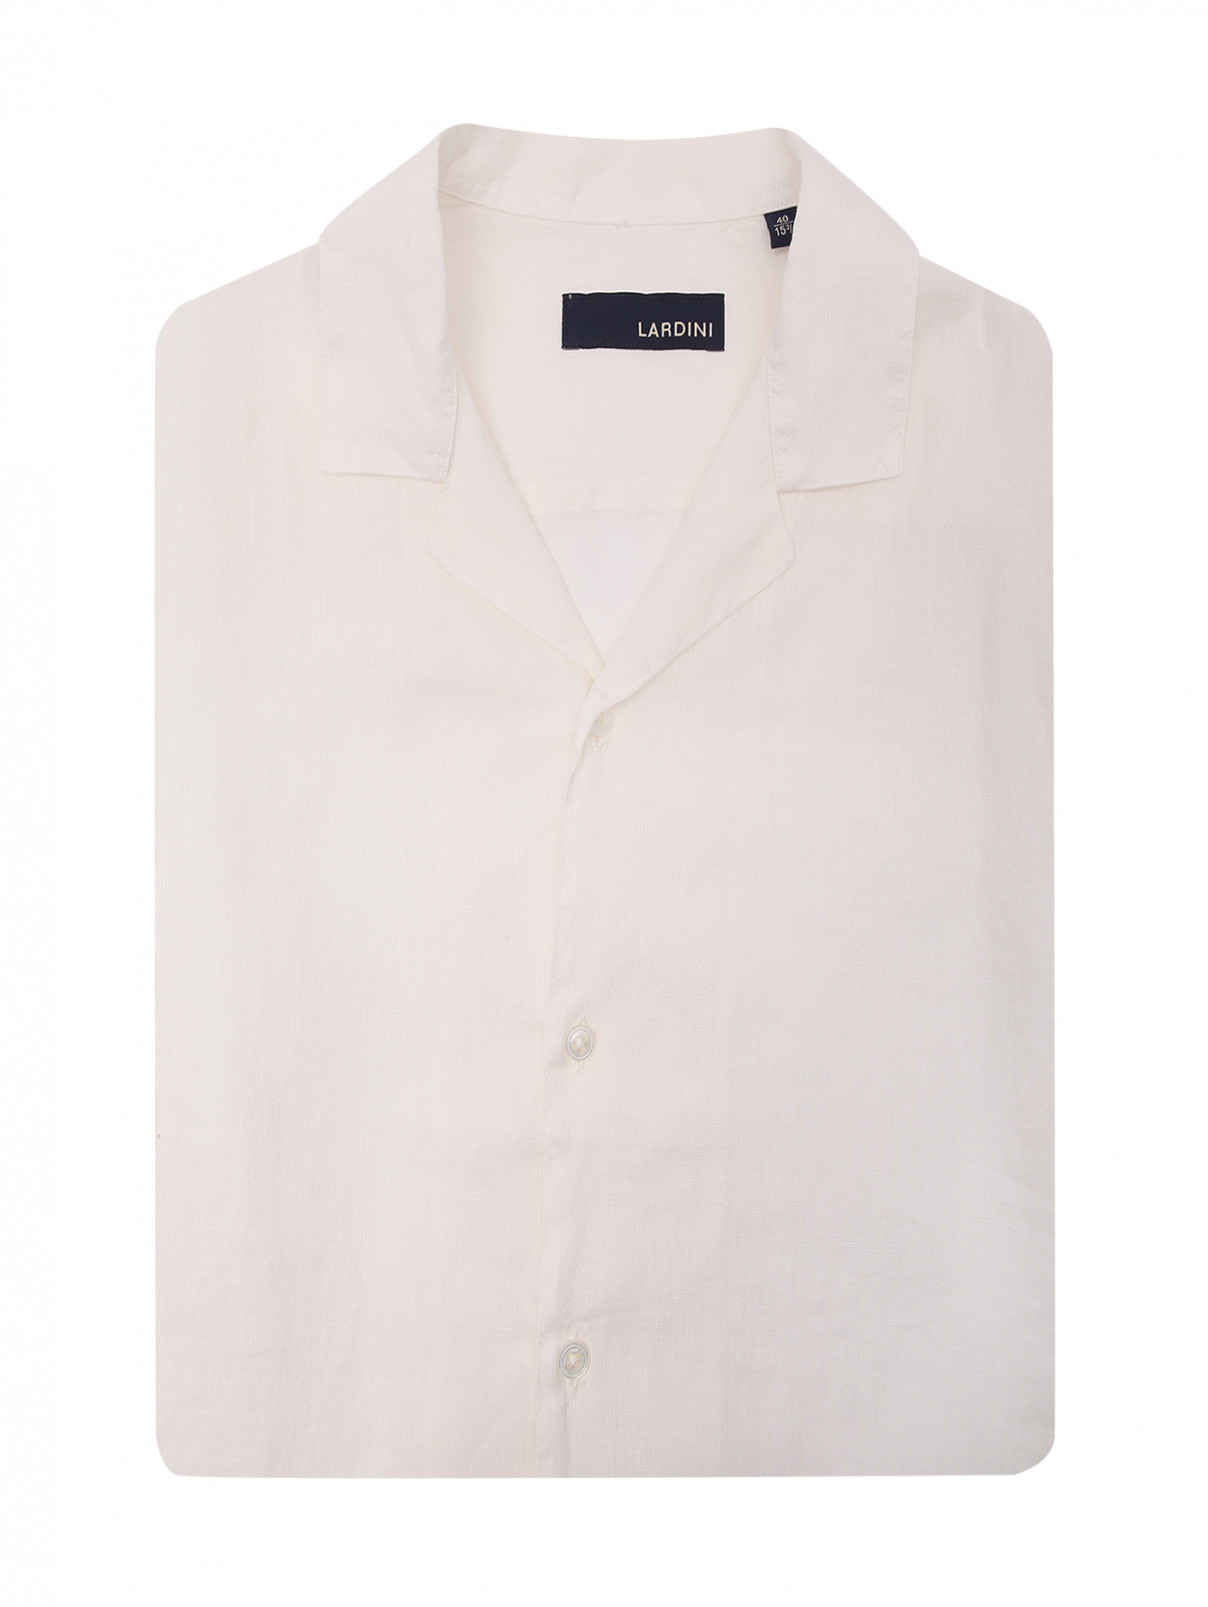 Рубашка из льна с короткими рукавами LARDINI  –  Общий вид  – Цвет:  Белый